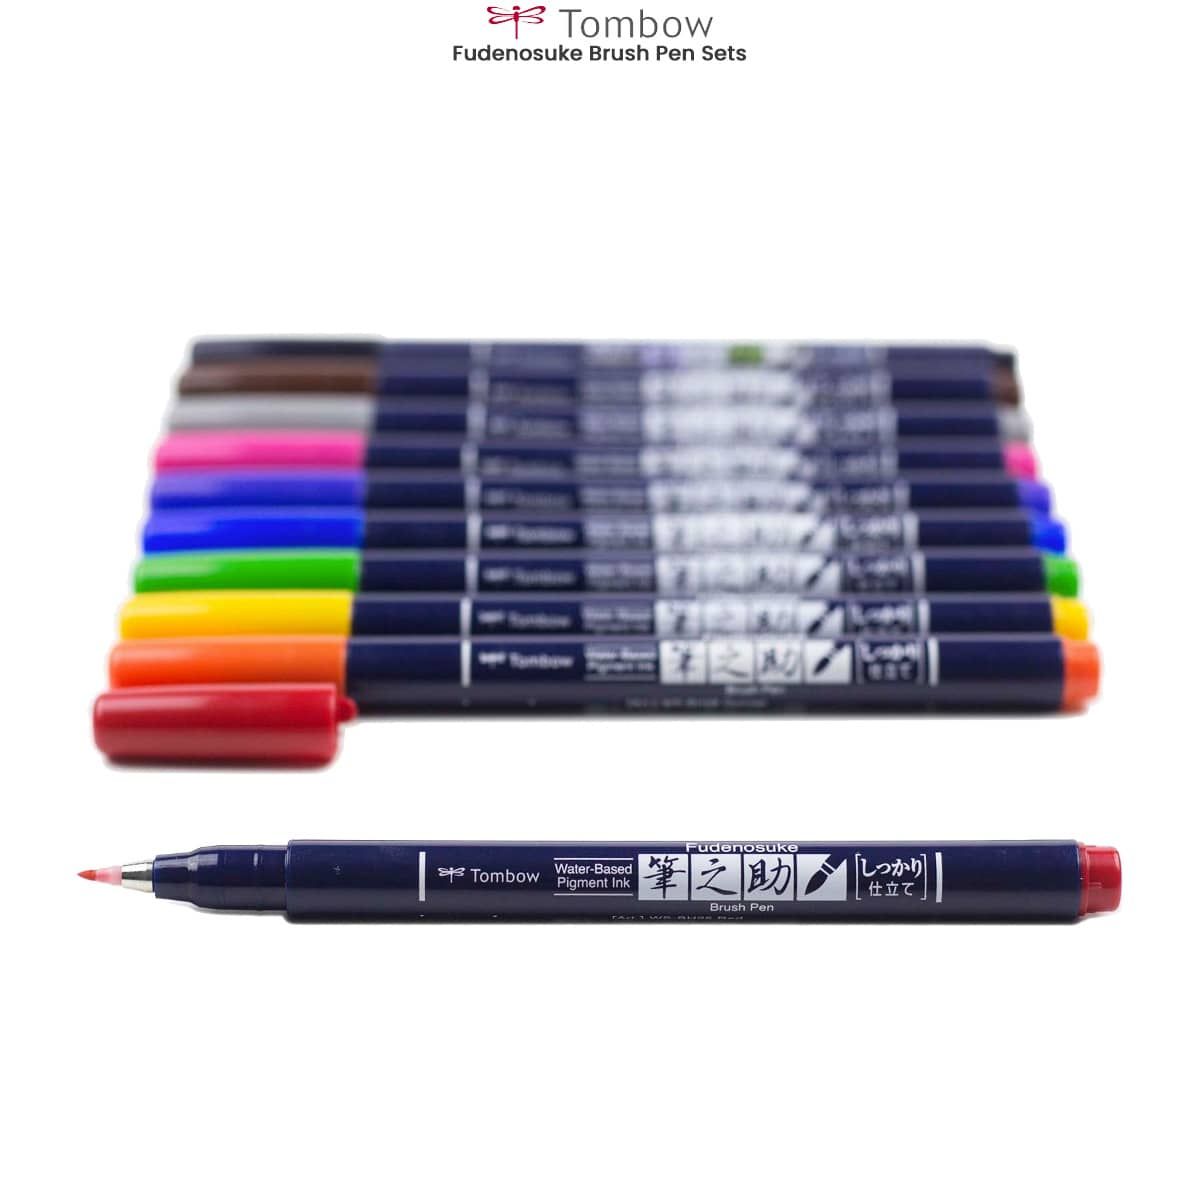 Tombow Fudenosuke Brush Pen Sets